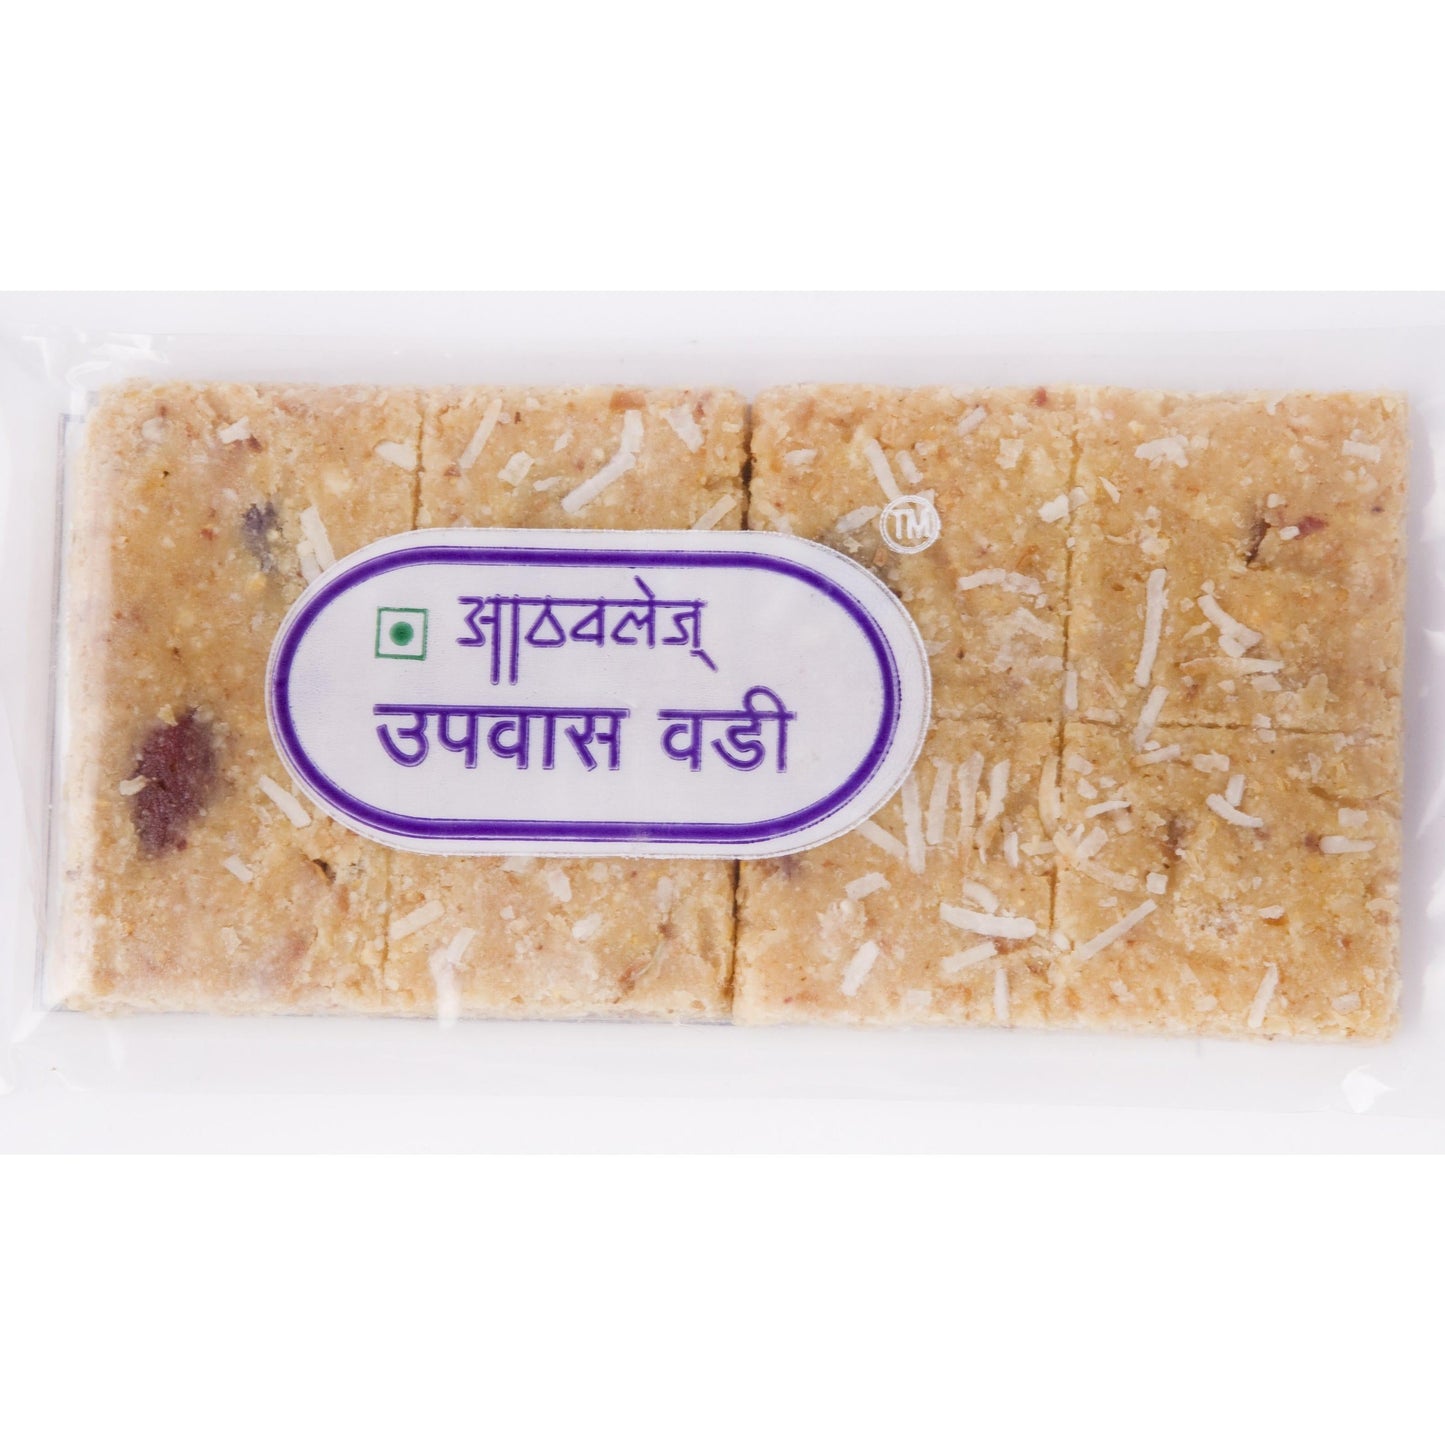 [Indian Multi Brand Store],[Chitale Bandhu Mithaiwale],[Kaka Halwai],[K-Pra],[Desai Bandhu],[Indian Sweets],[Shipping to USA],[Worldwide Shipping of Indian Products]- SwiftIndi